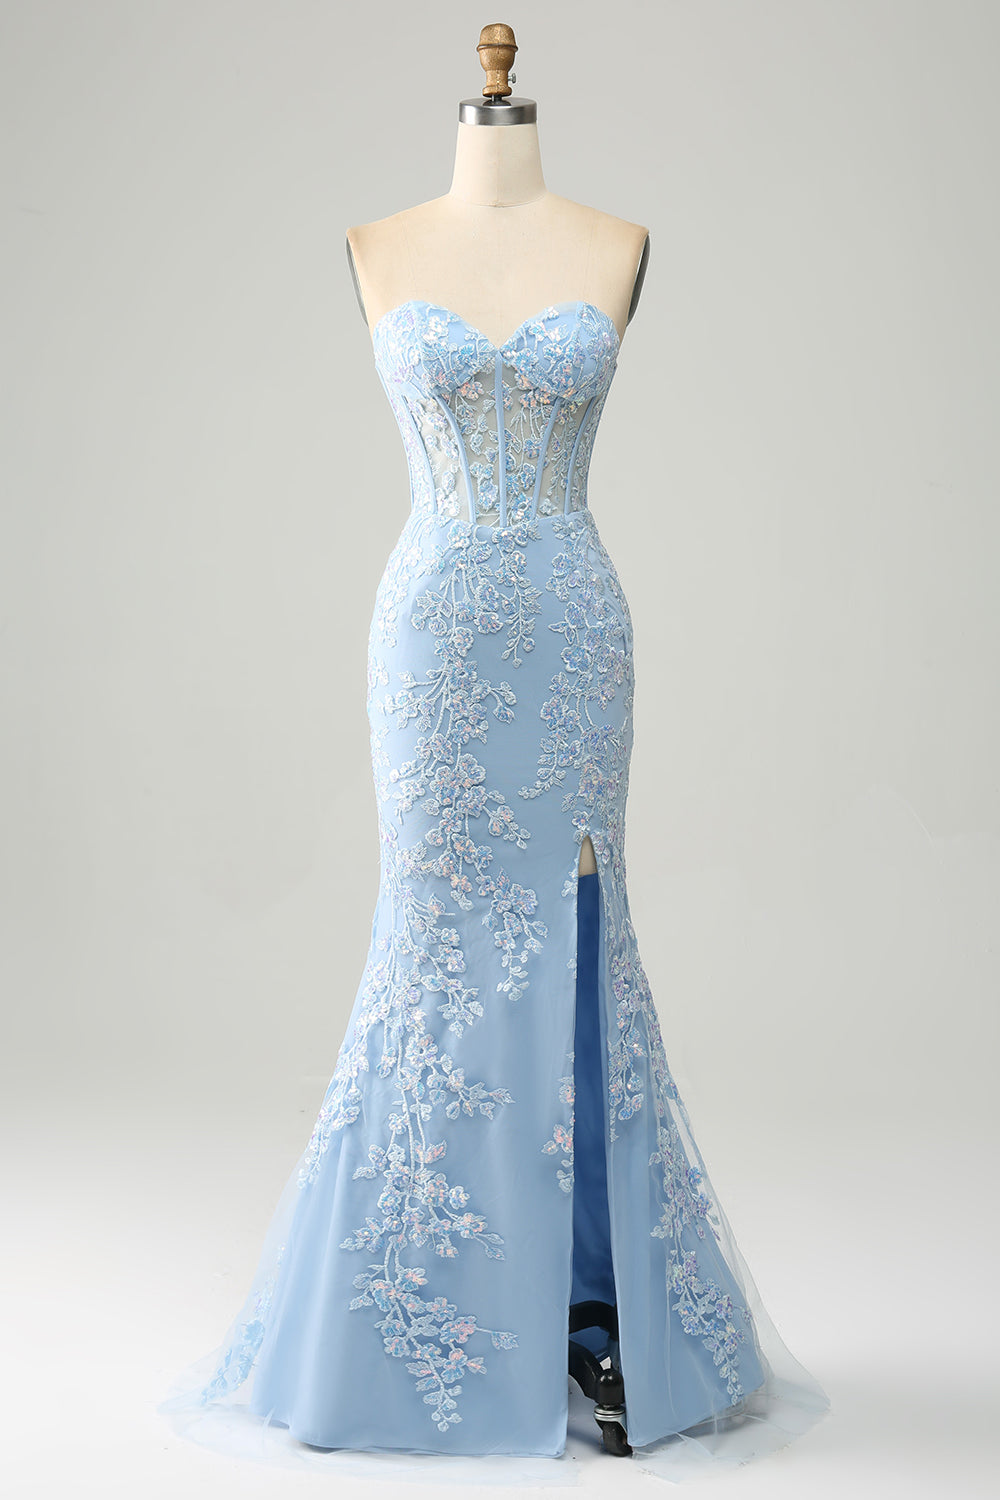 ZAPAKA Women Royal Blue Corset Prom Dress with Beading Mermaid